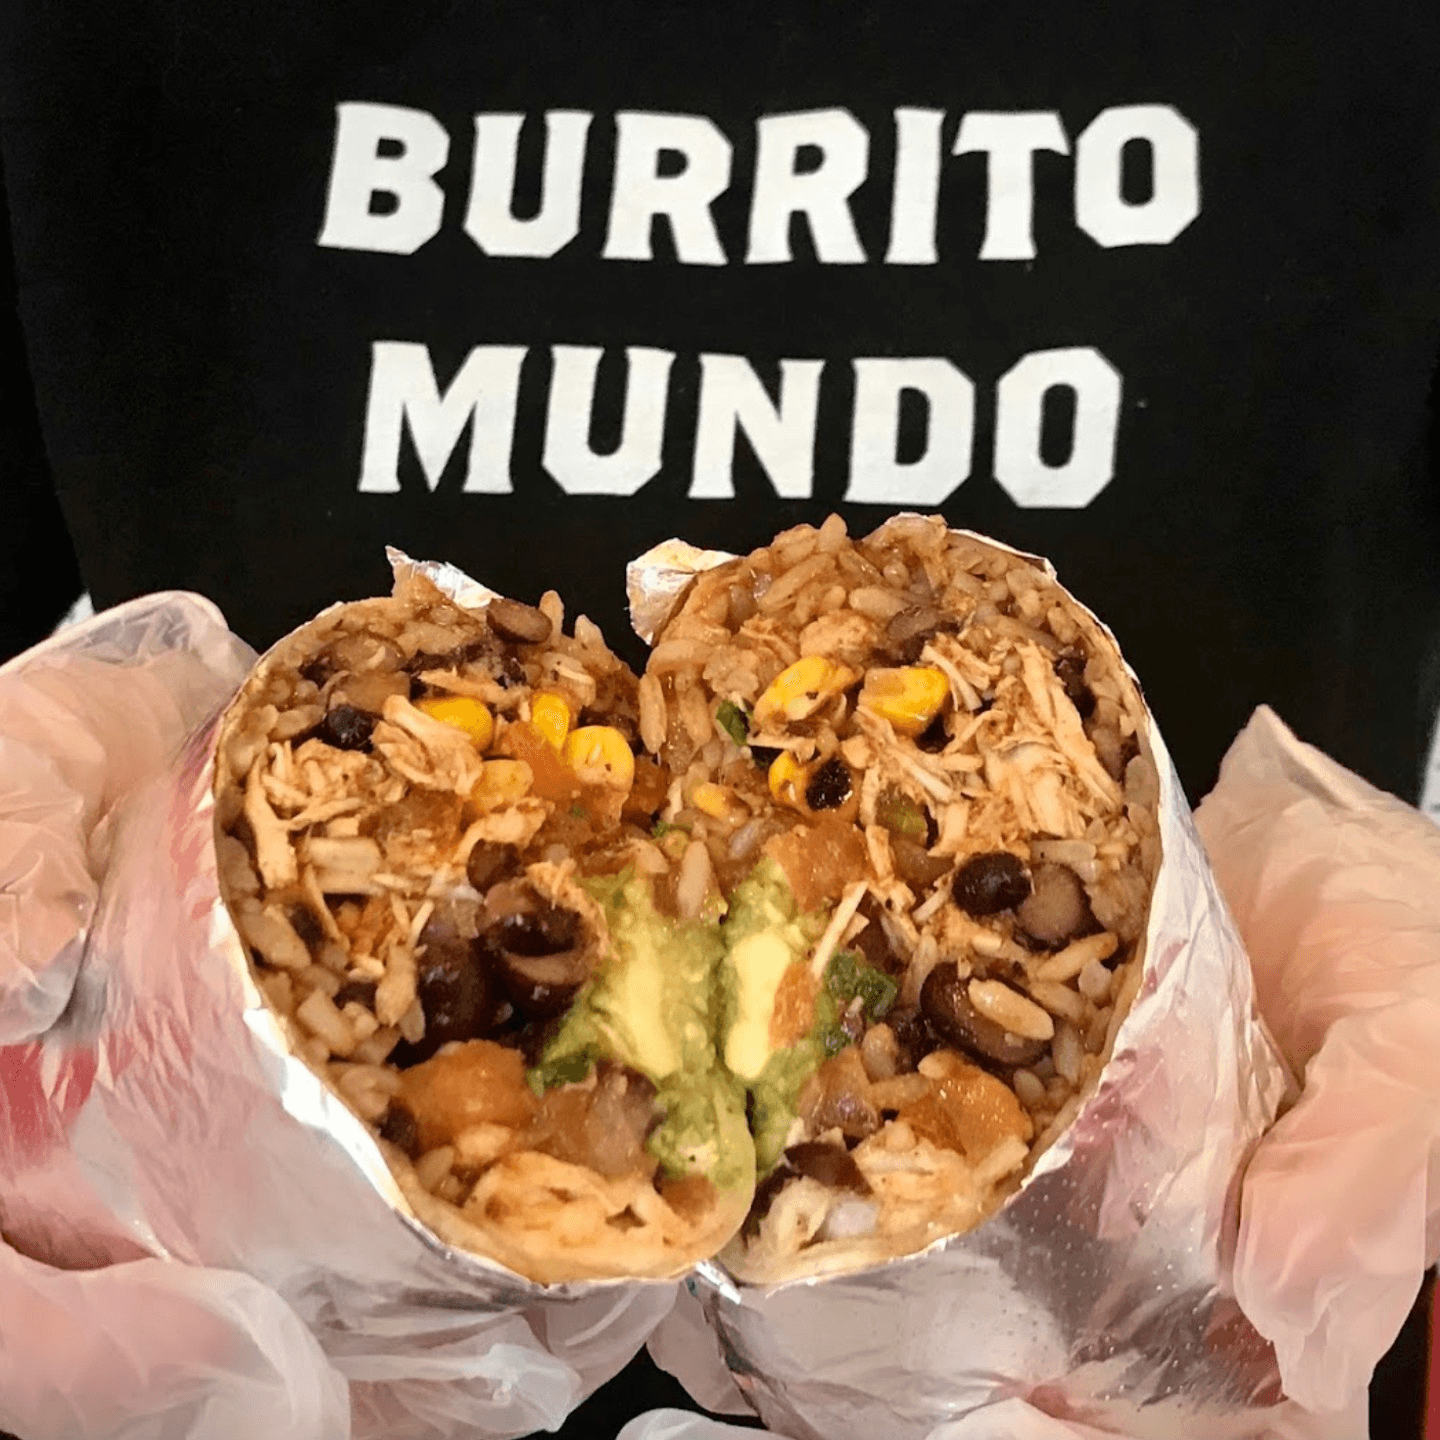 Welcome to Burrito Mundo!